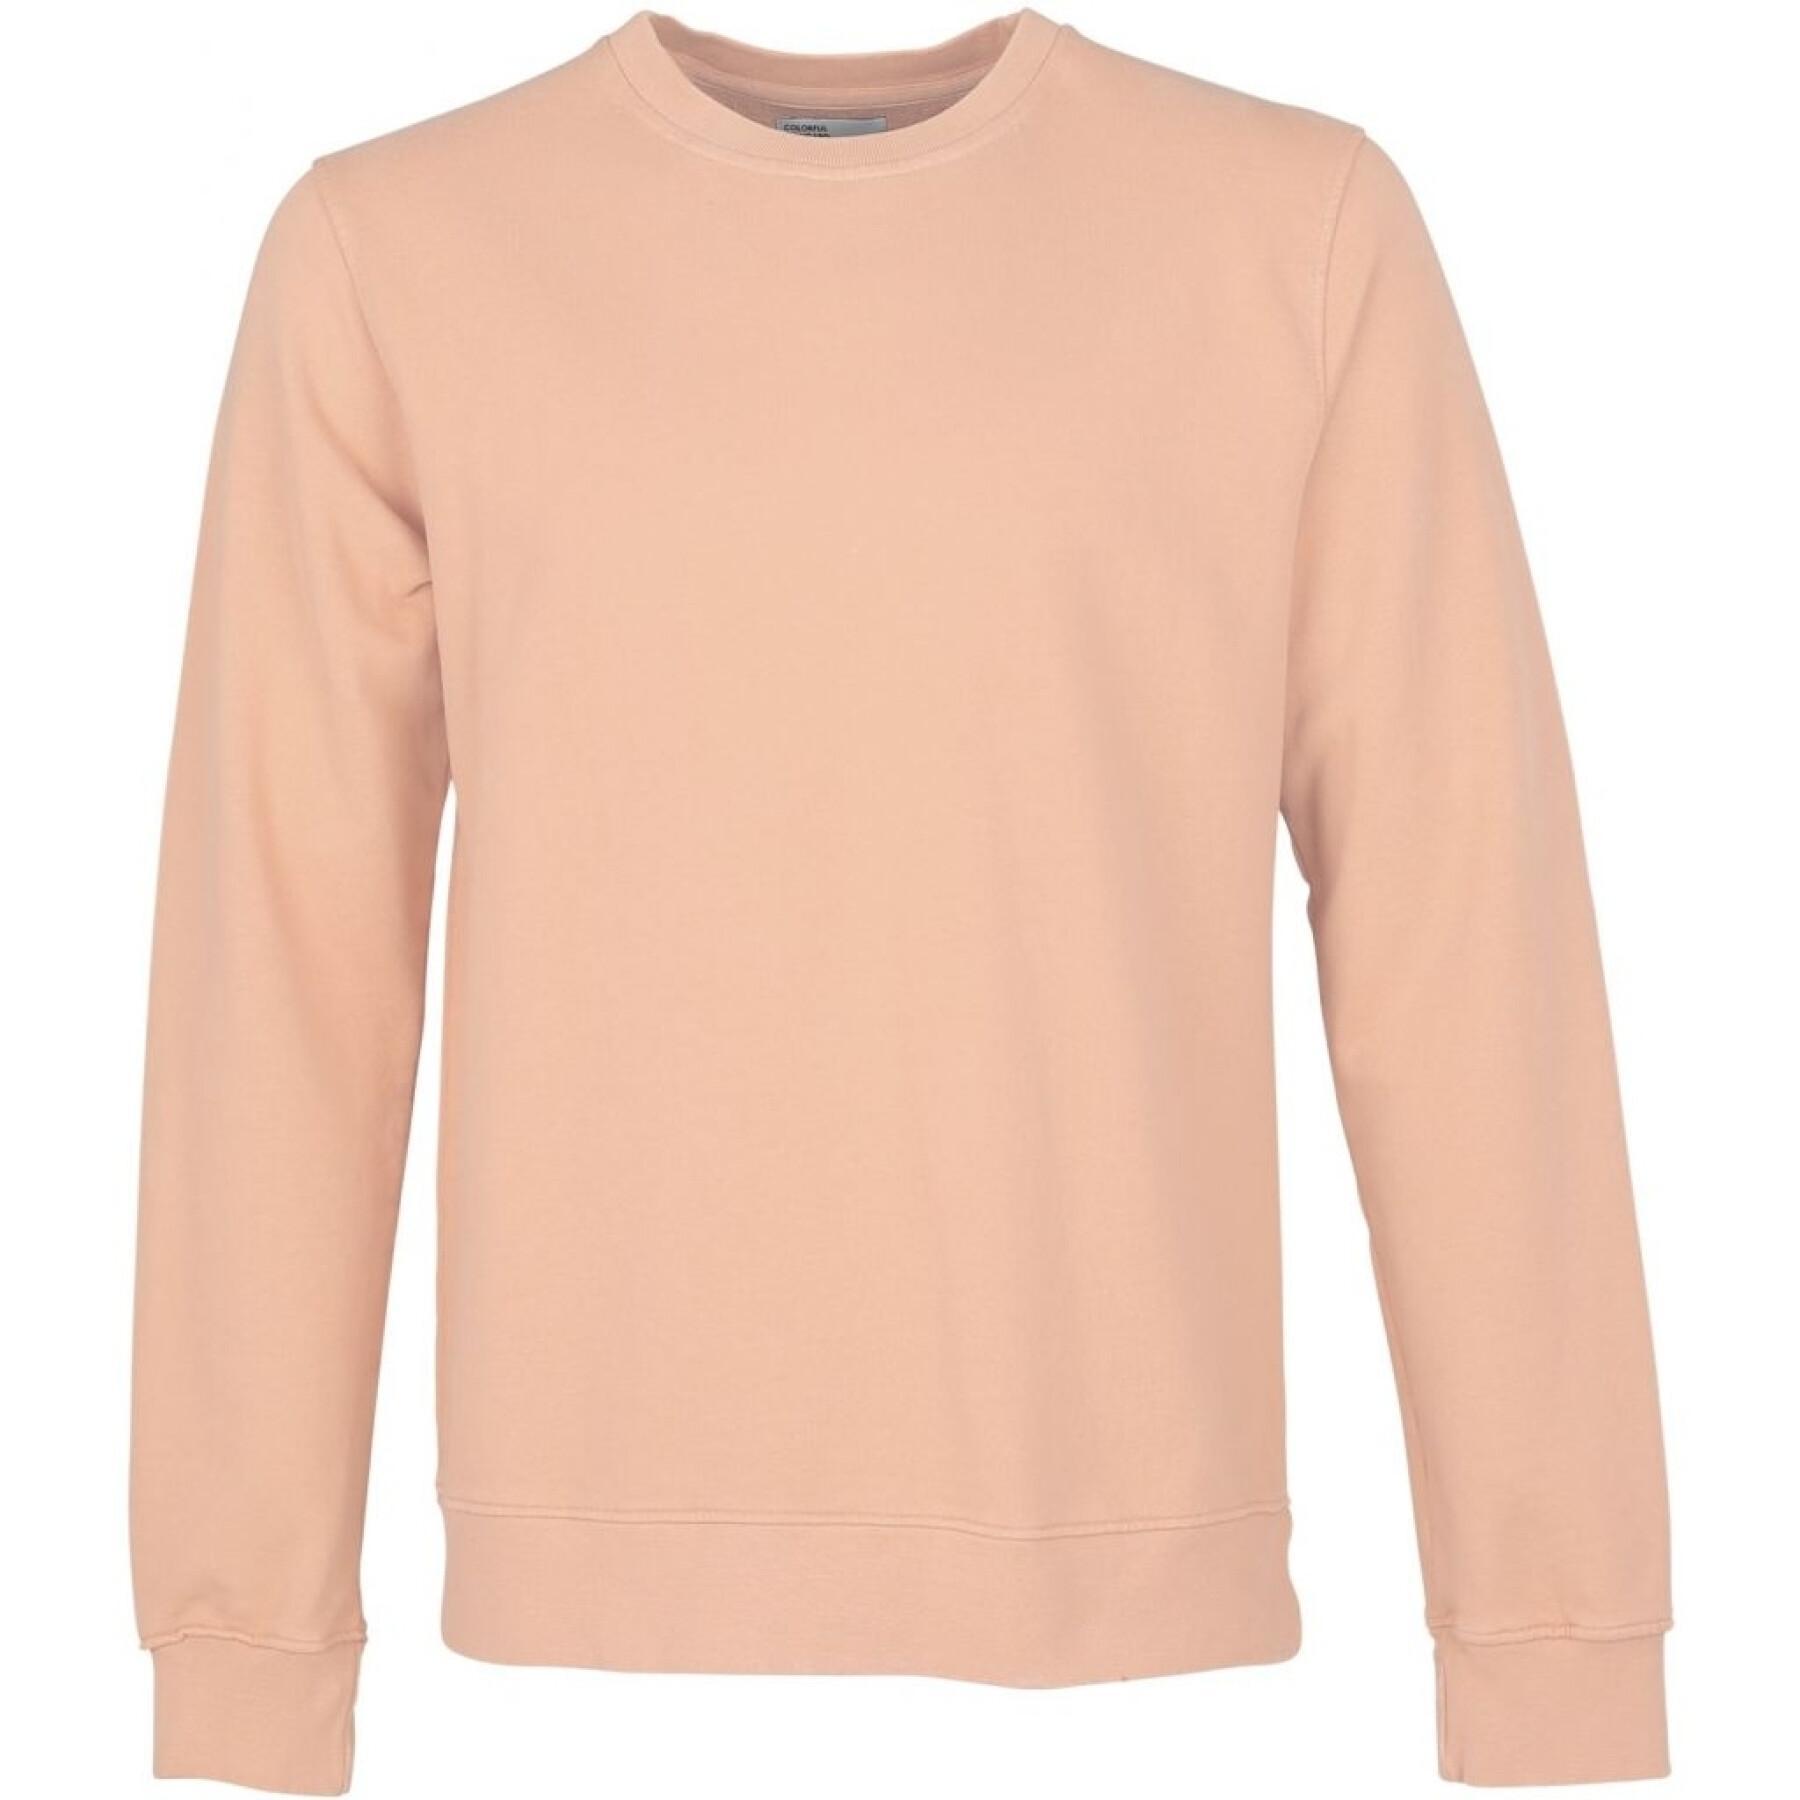 Sweatshirt mit Rundhalsausschnitt Colorful Standard Classic Organic paradise peach